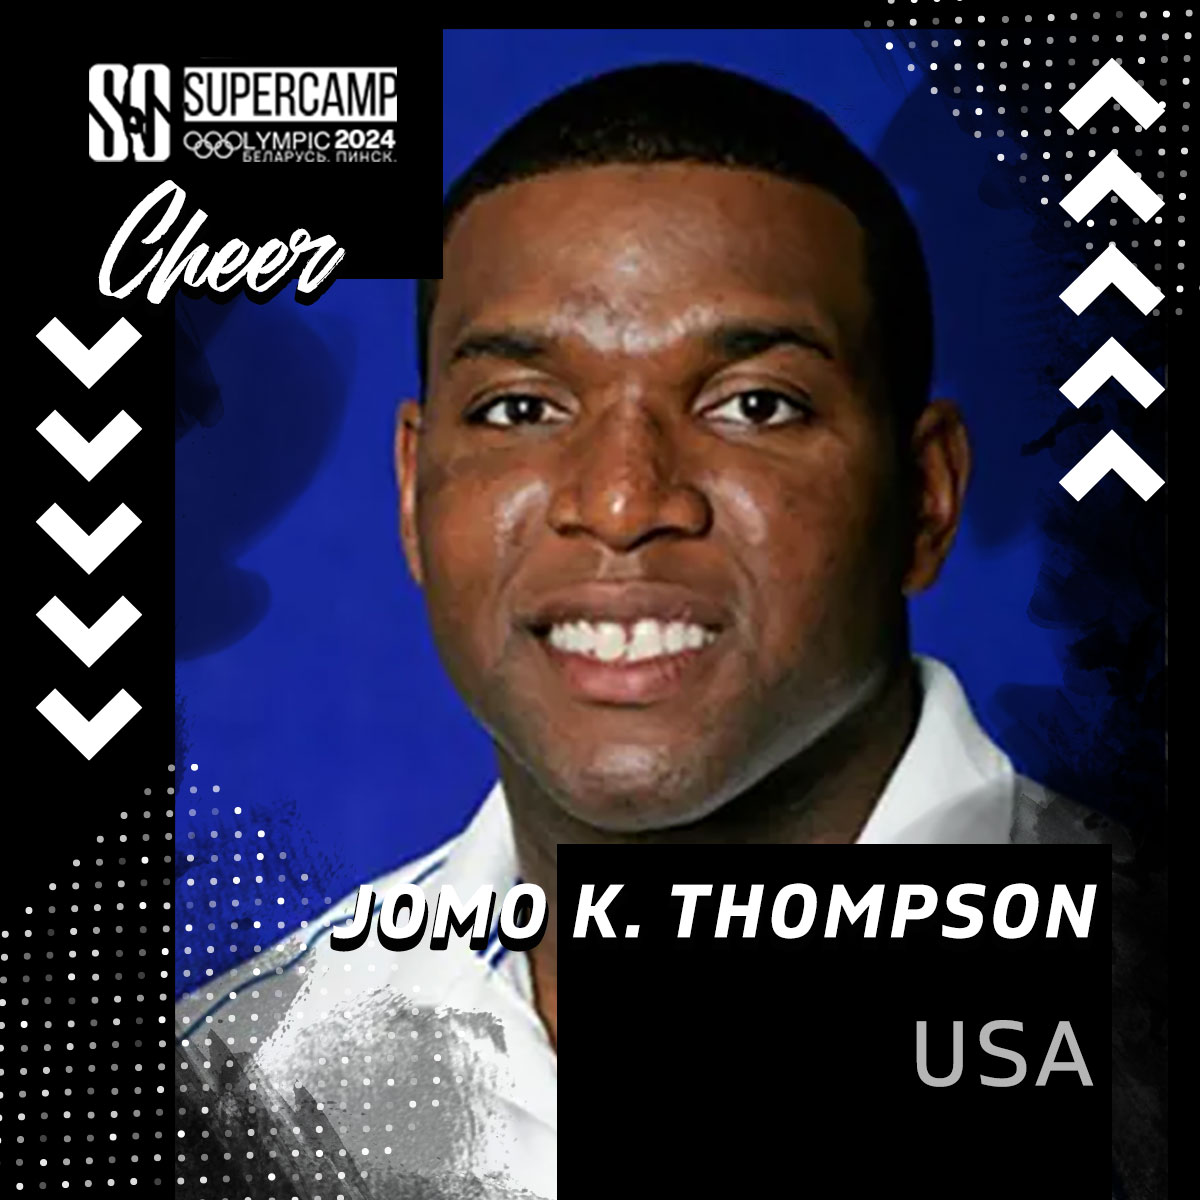 Jomo K. Thompson